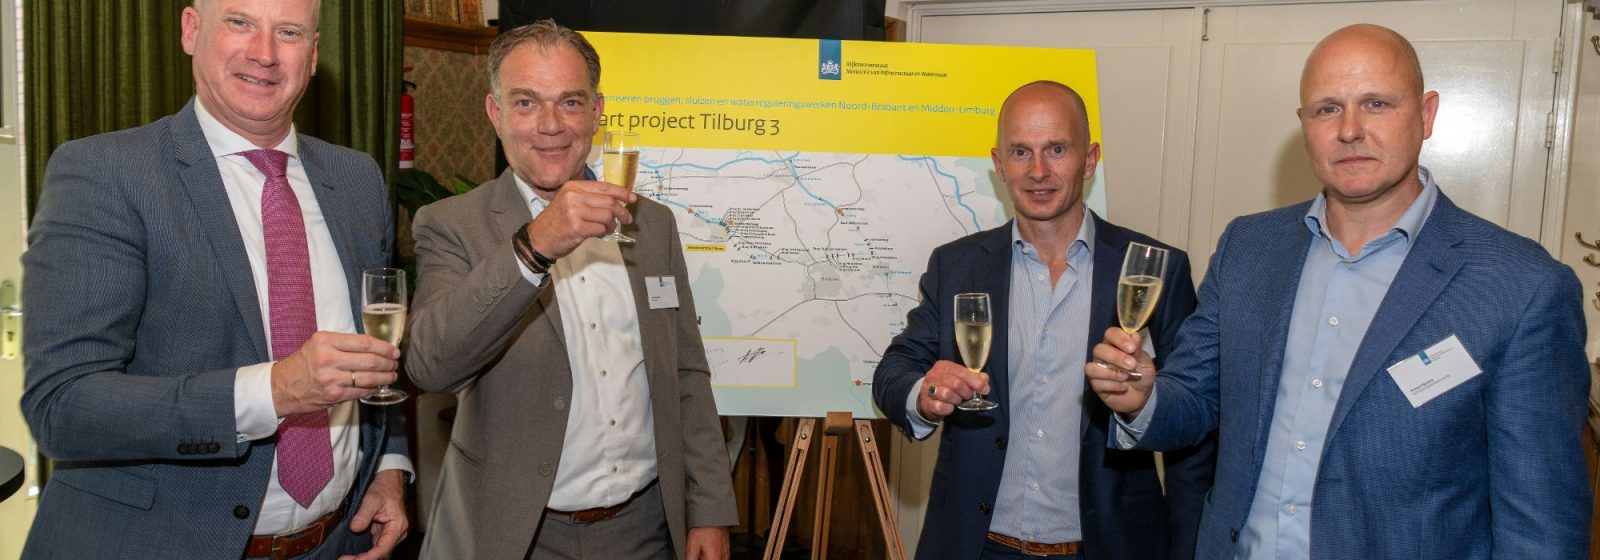 Startsein project Tilburg 3